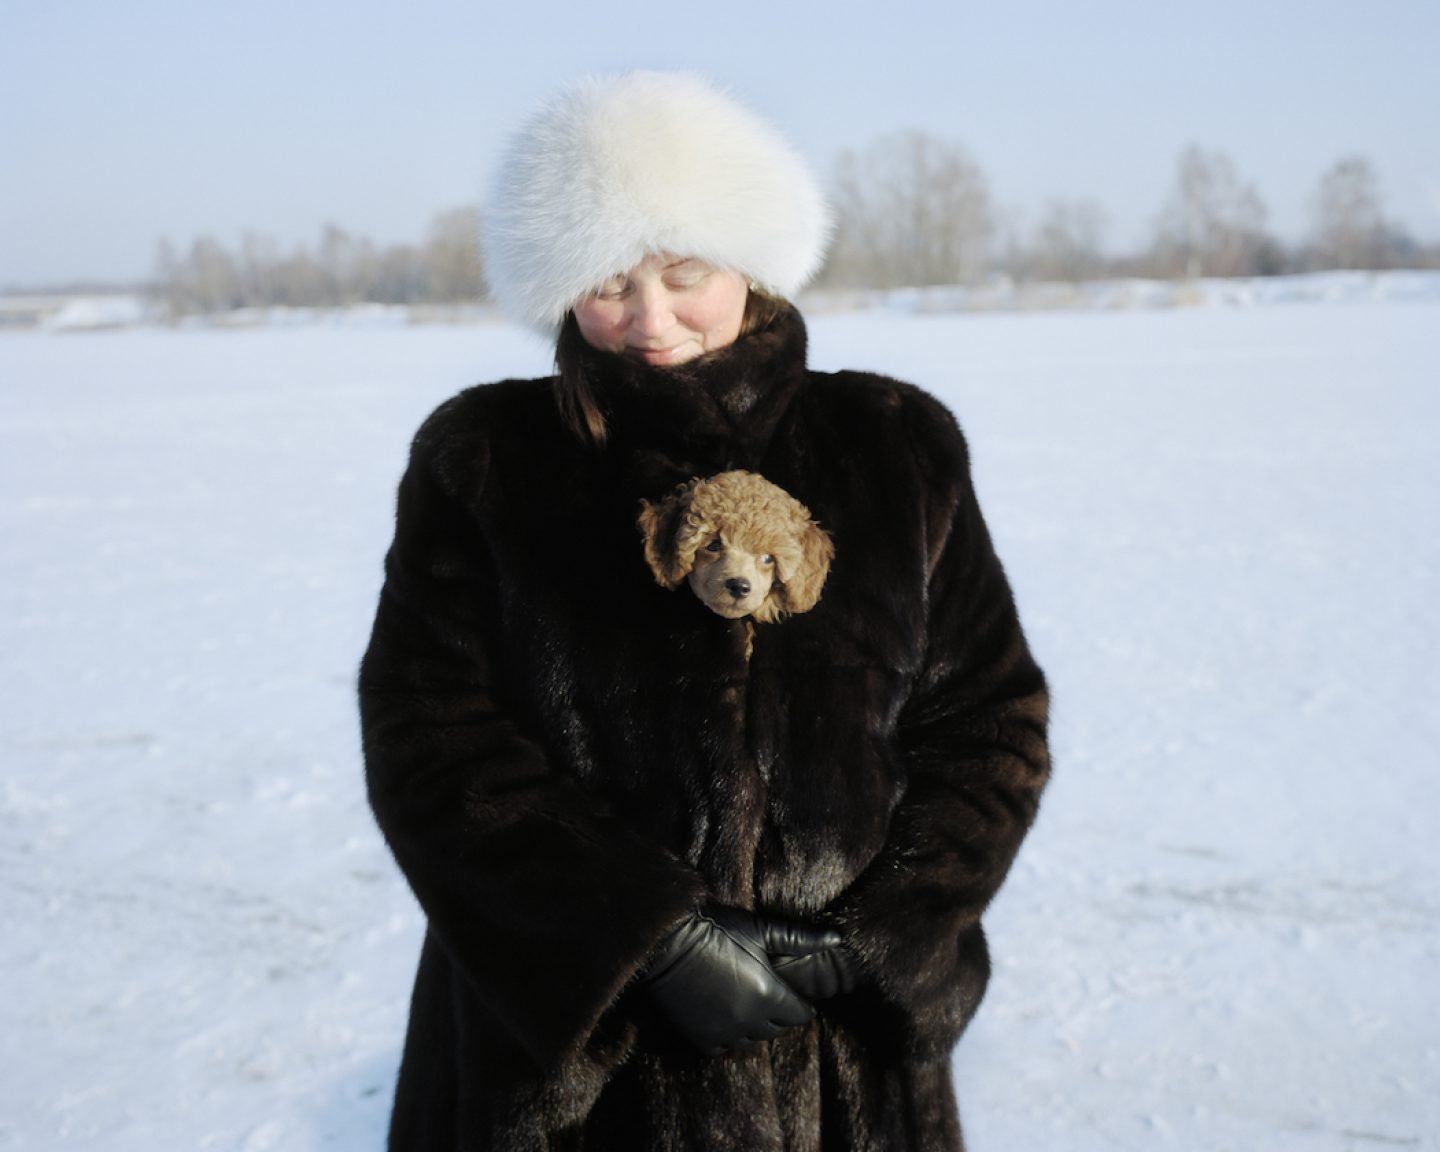 Olga with her dog